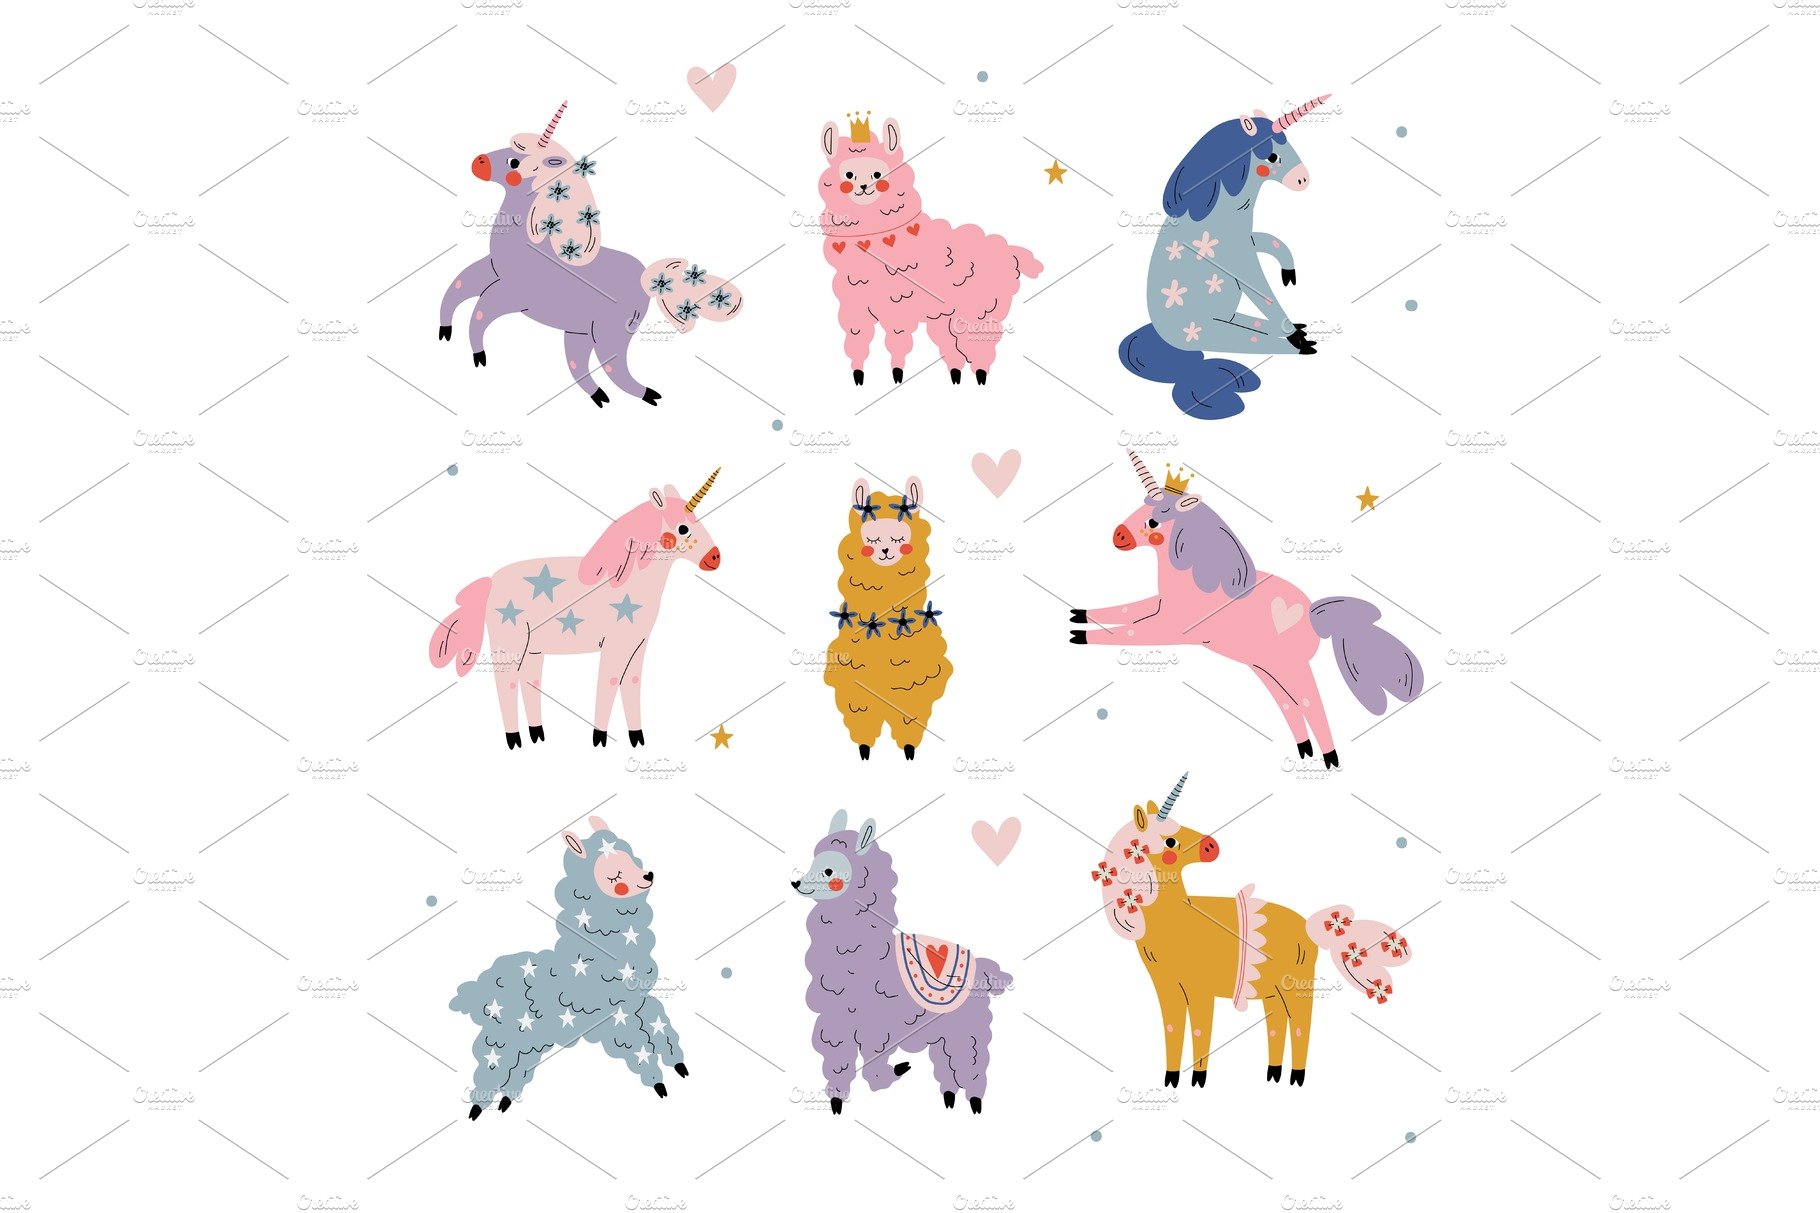 Cute Llamas and Unicorns Set cover image.